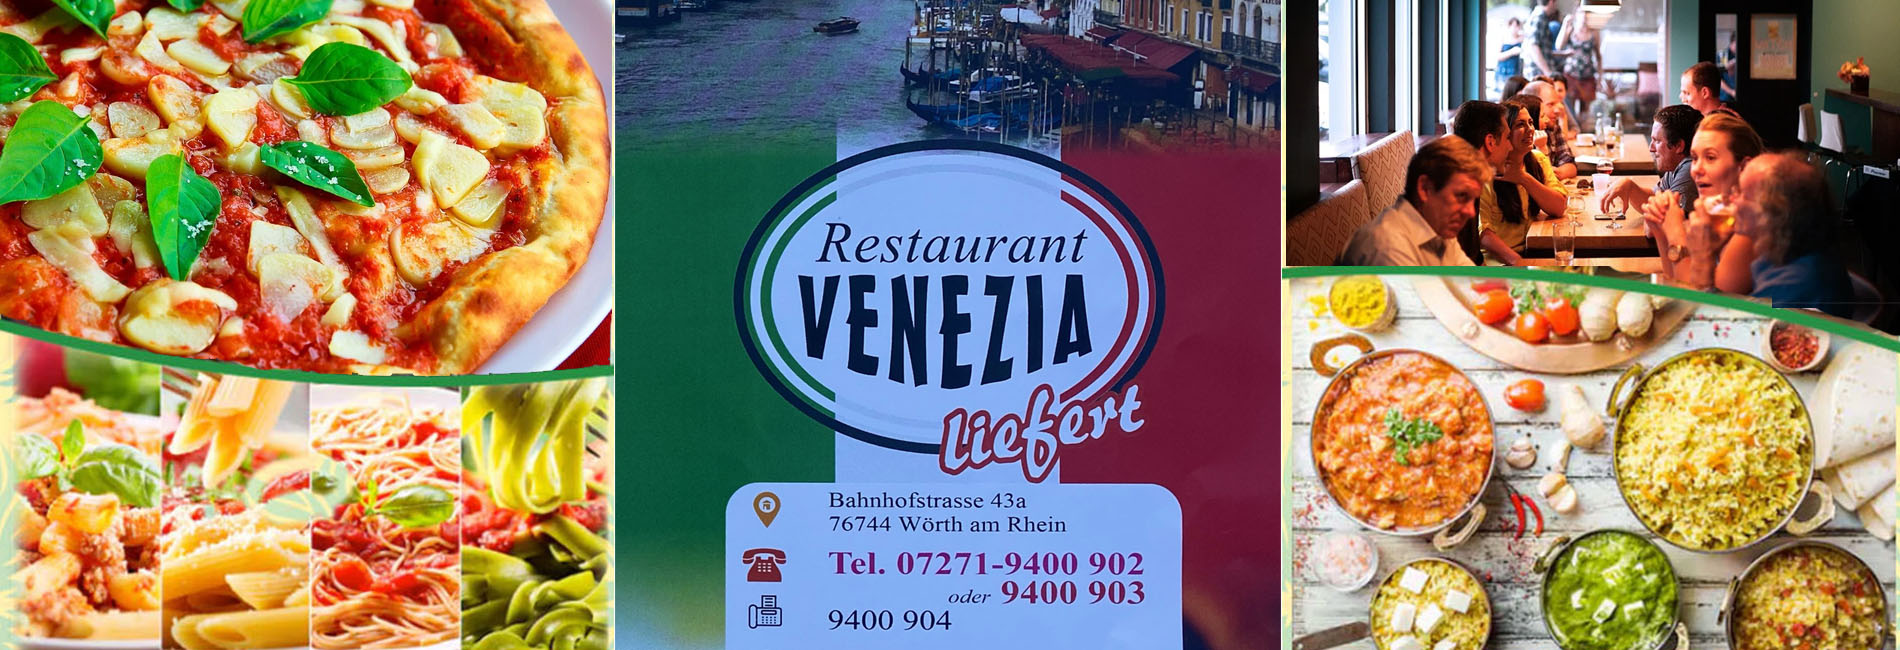 Venezia Restaurants & Lieferservice